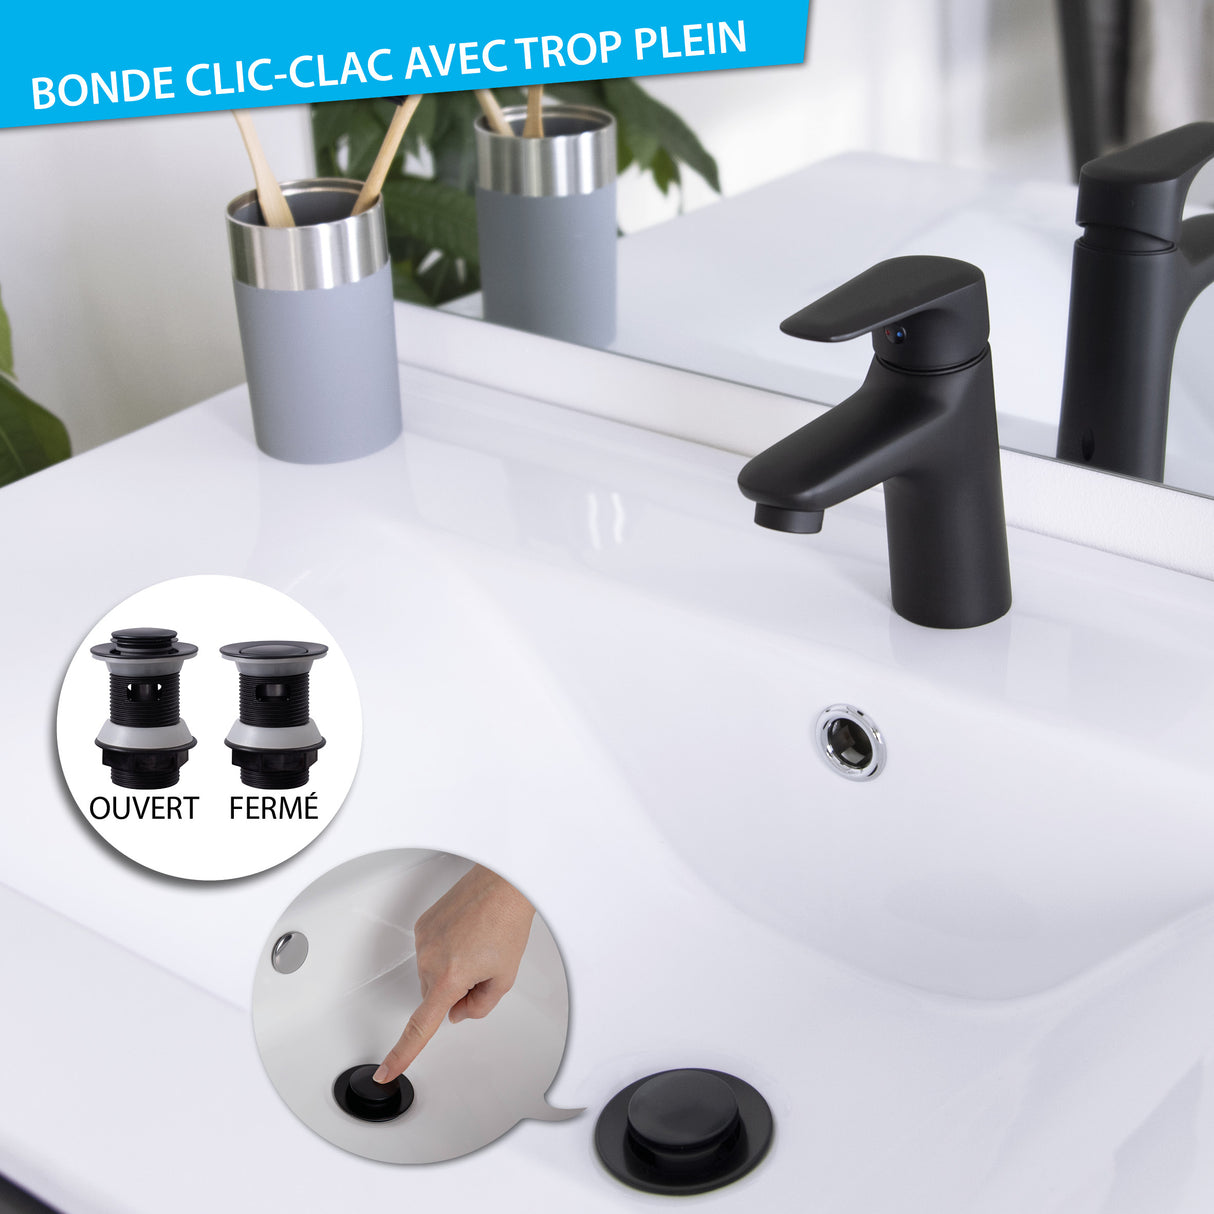 Bonde lavabo clic clac S/T noir mat 38TP0163I Promodar là où on se ressource